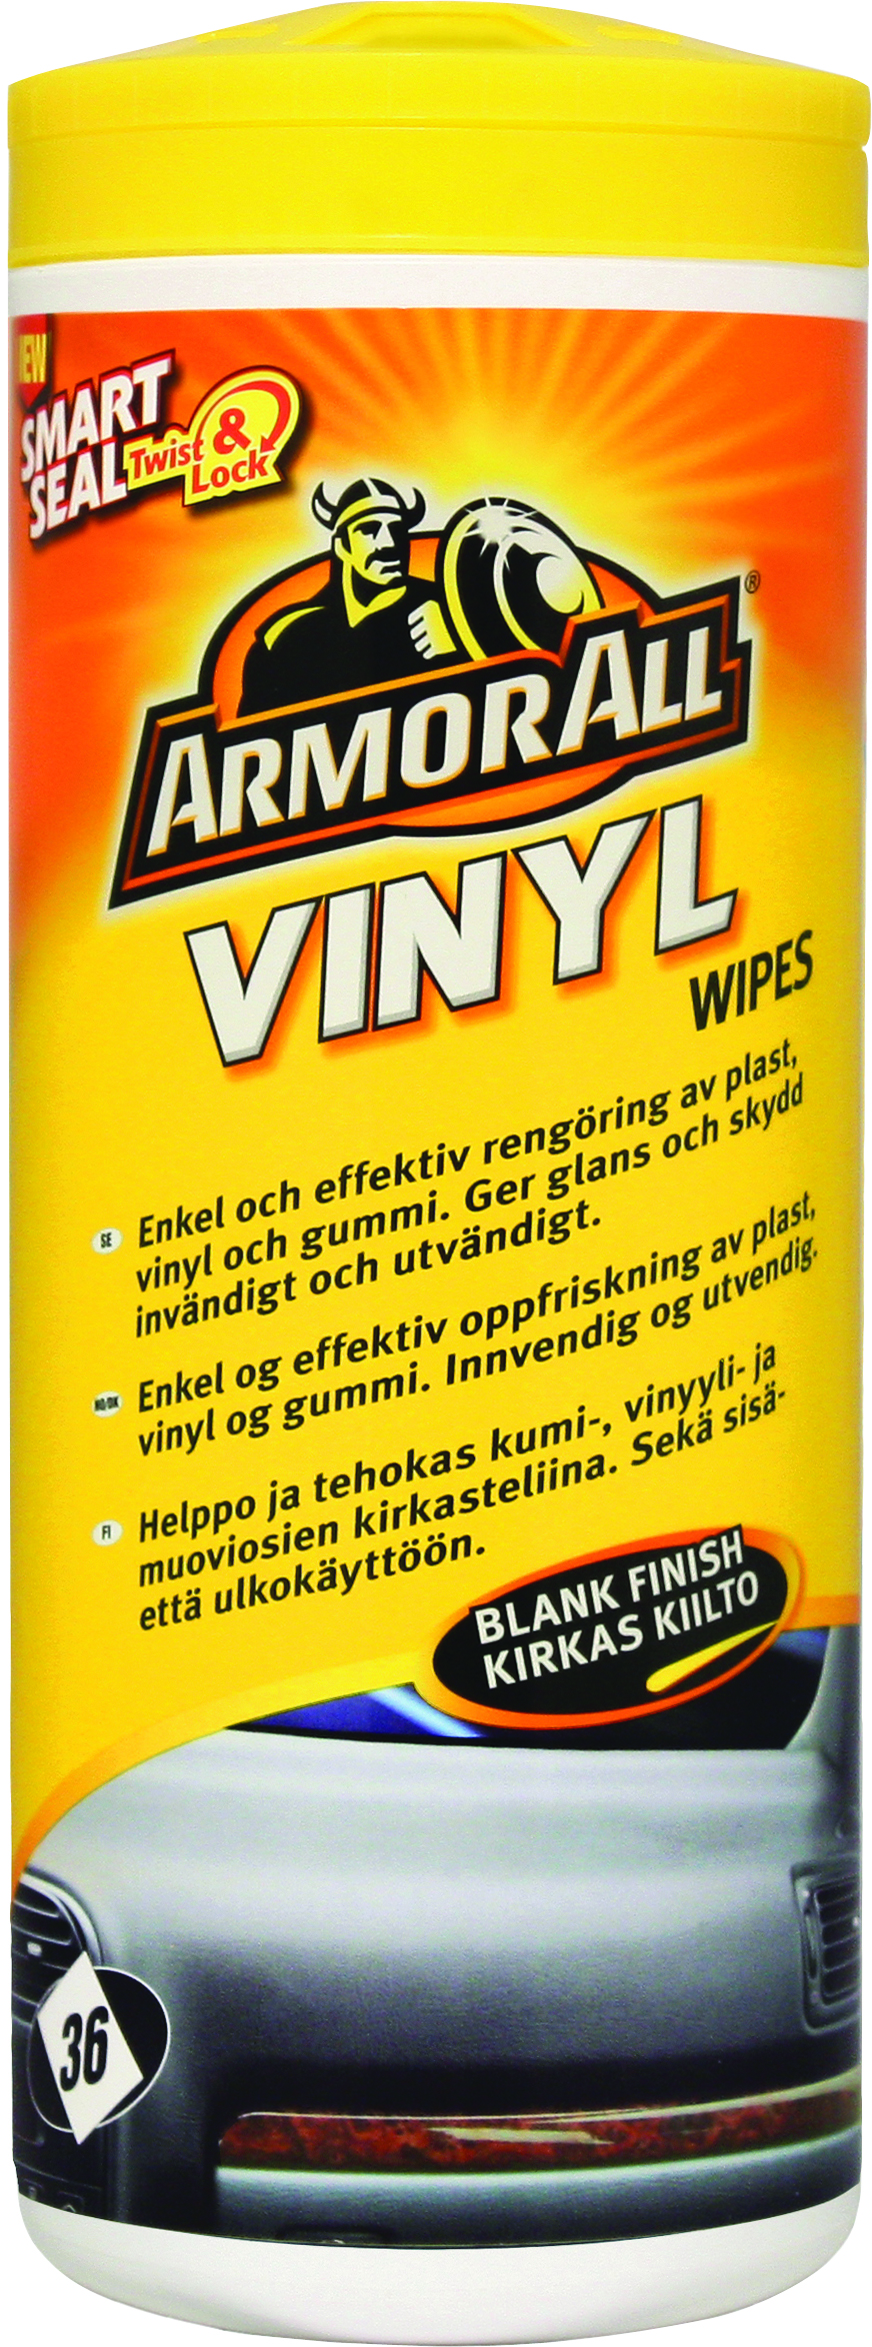 Armor All Vinyl blank wipes